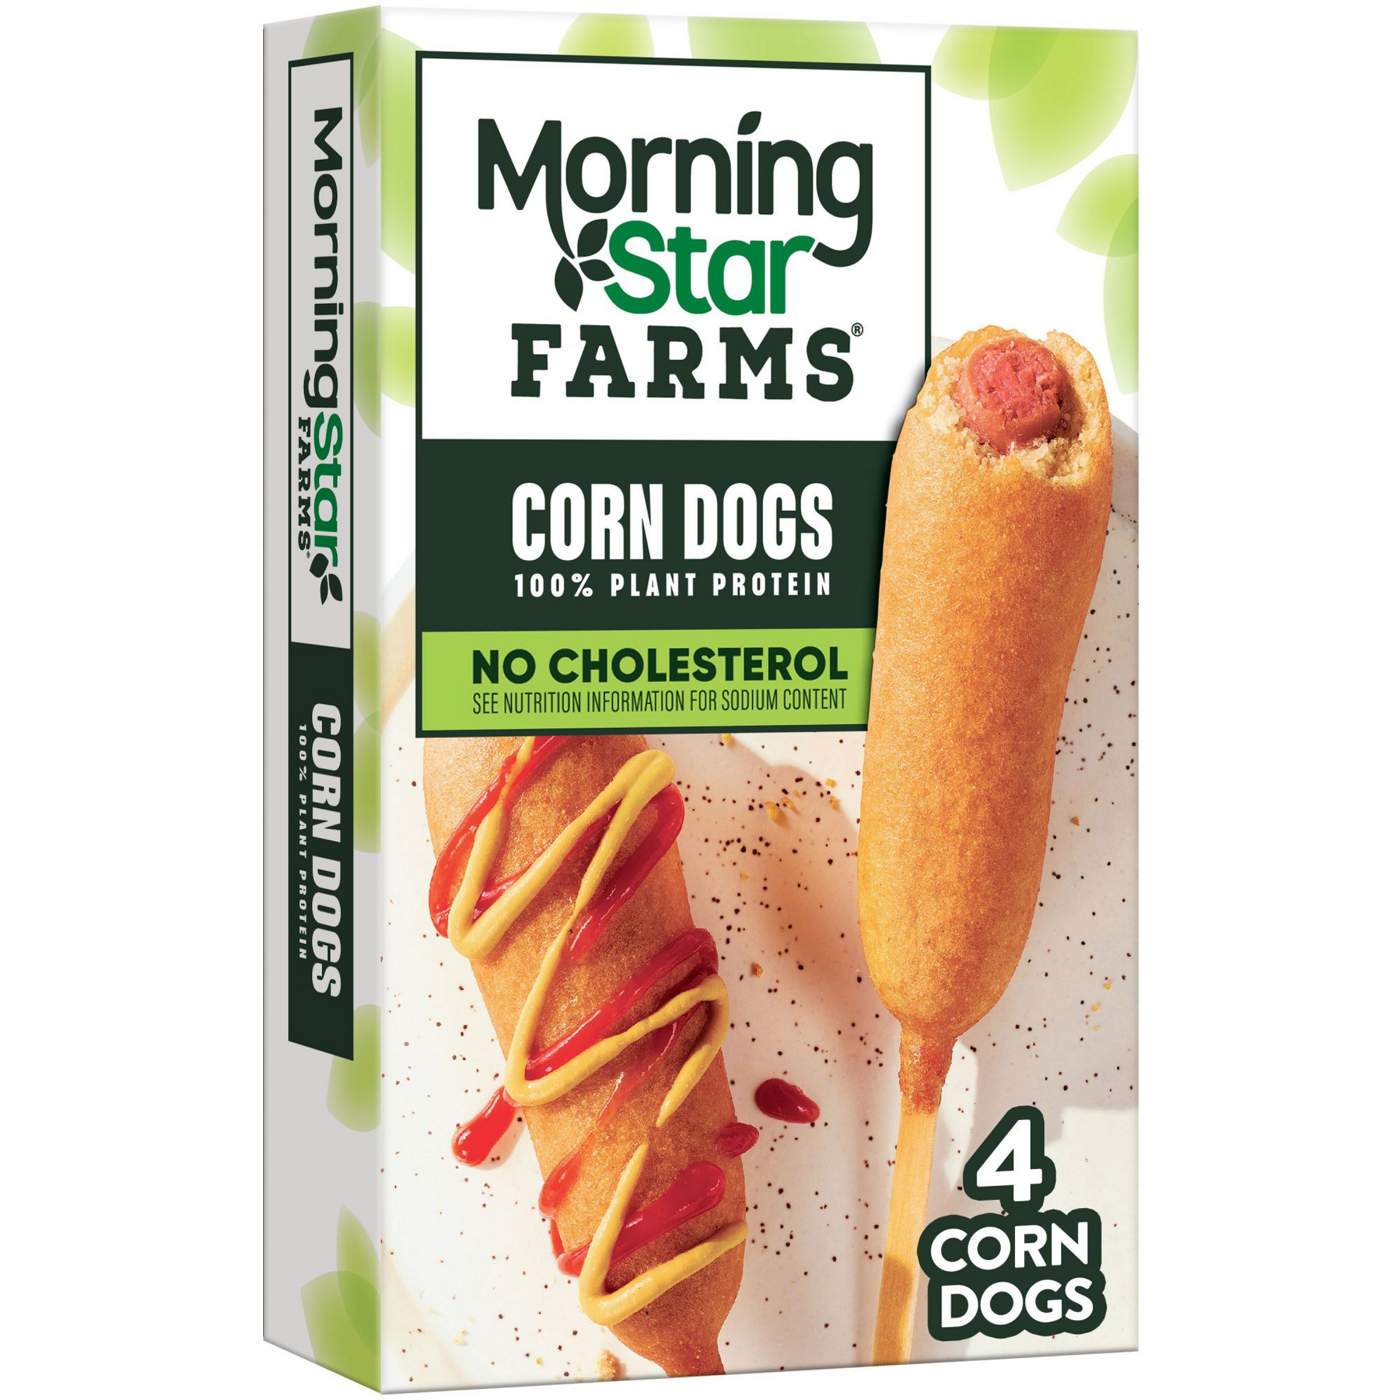 MorningStar Farms Original Corn Dogs; image 4 of 5